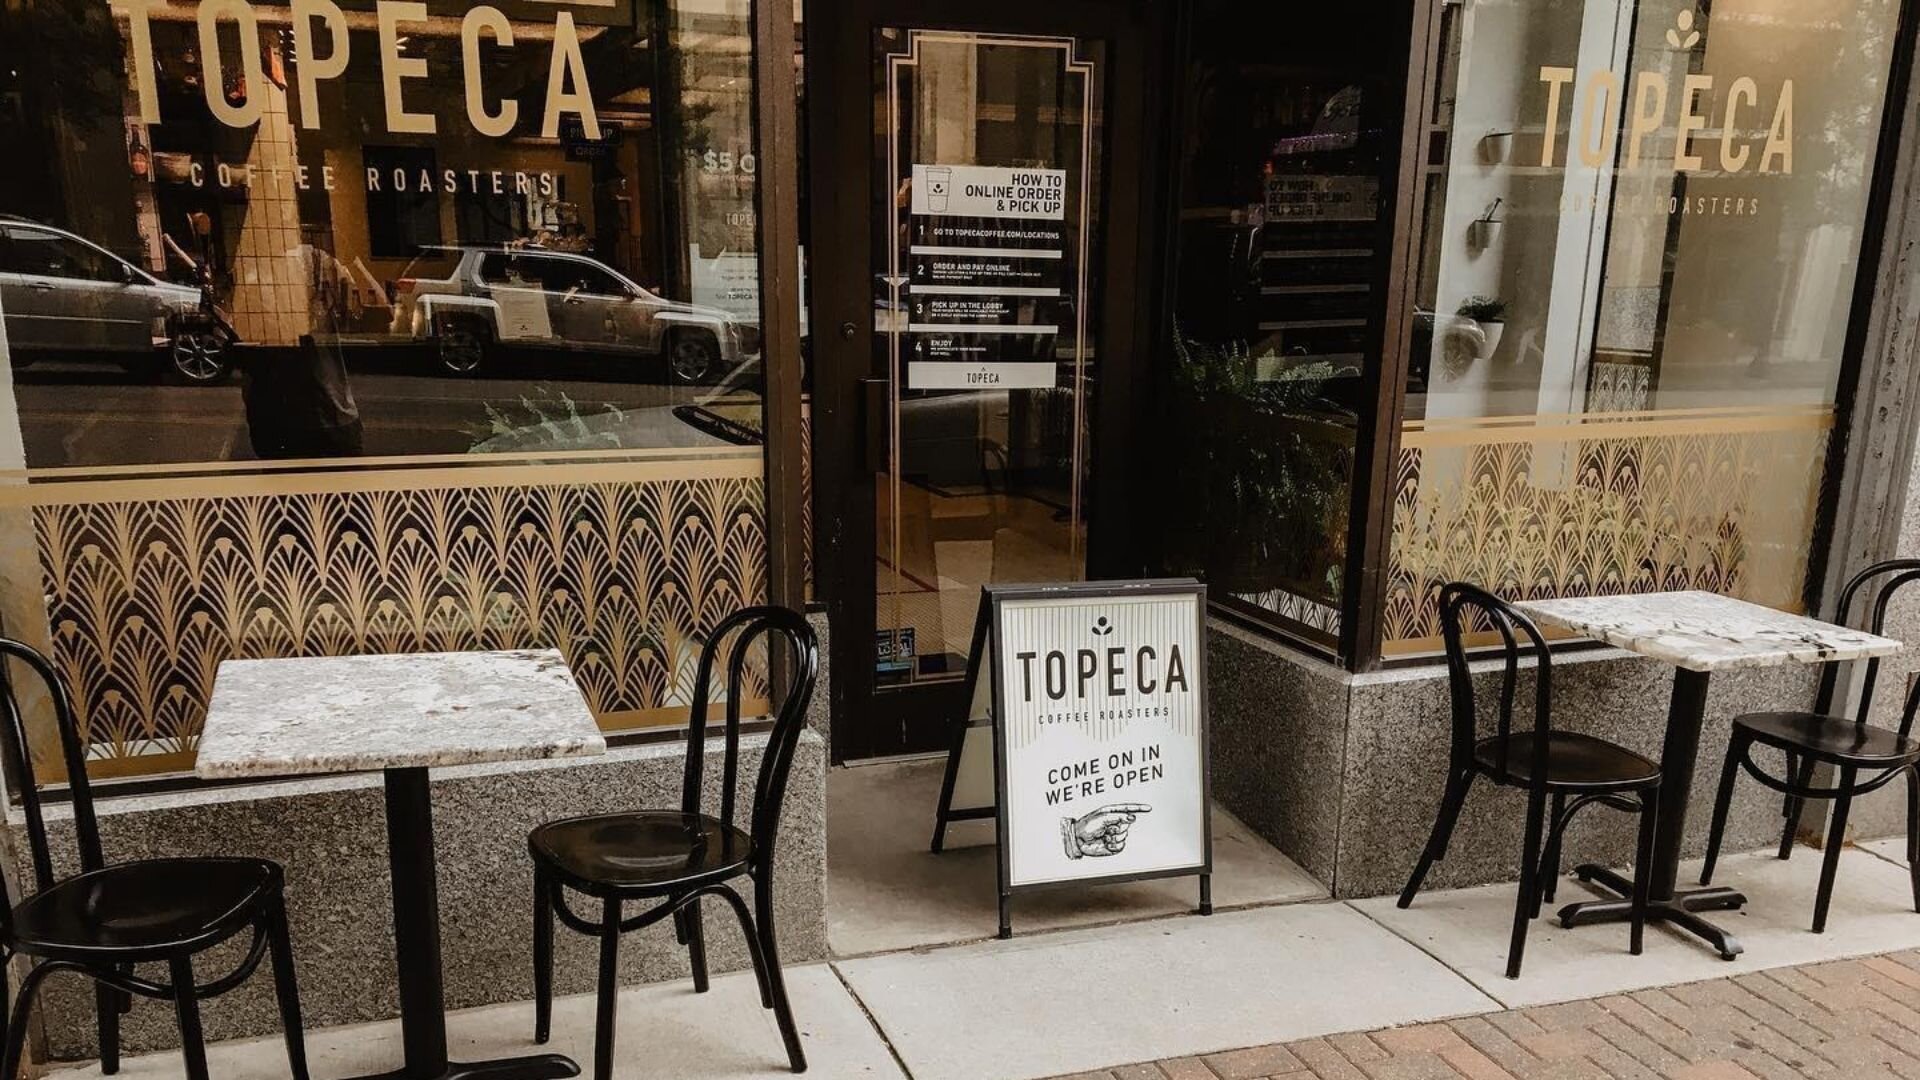 Topeca Coffee in Downtown Tulsa OK USA - Explore Local Coffee Shops with TulsaGo.jpg